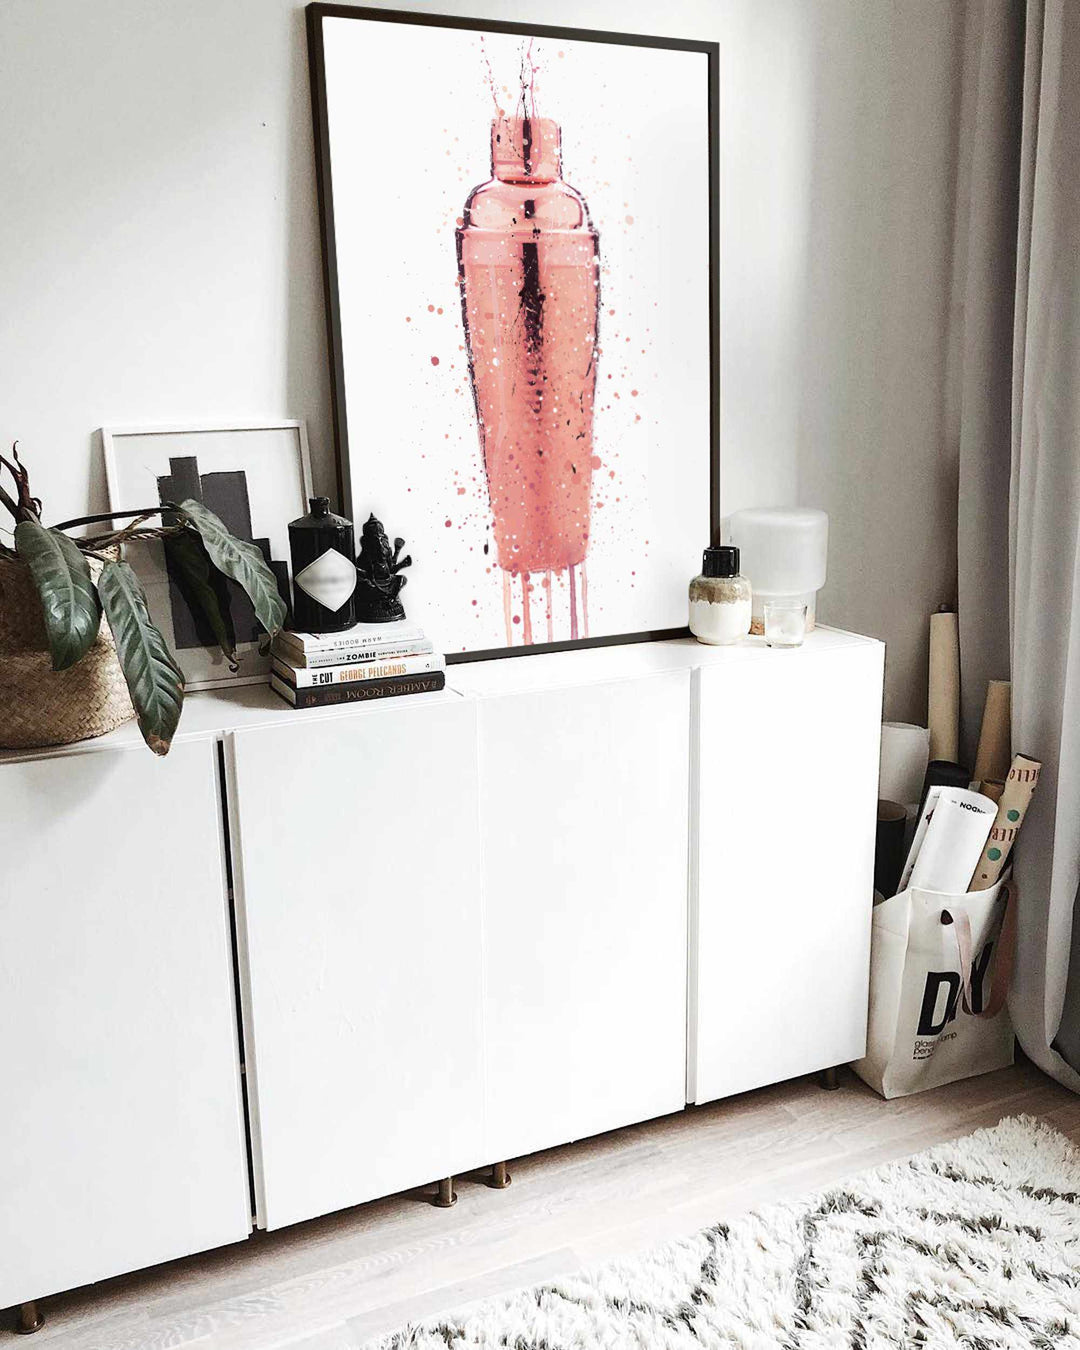 Cocktail-Shaker-Wand-Kunstdruck (Roségold)